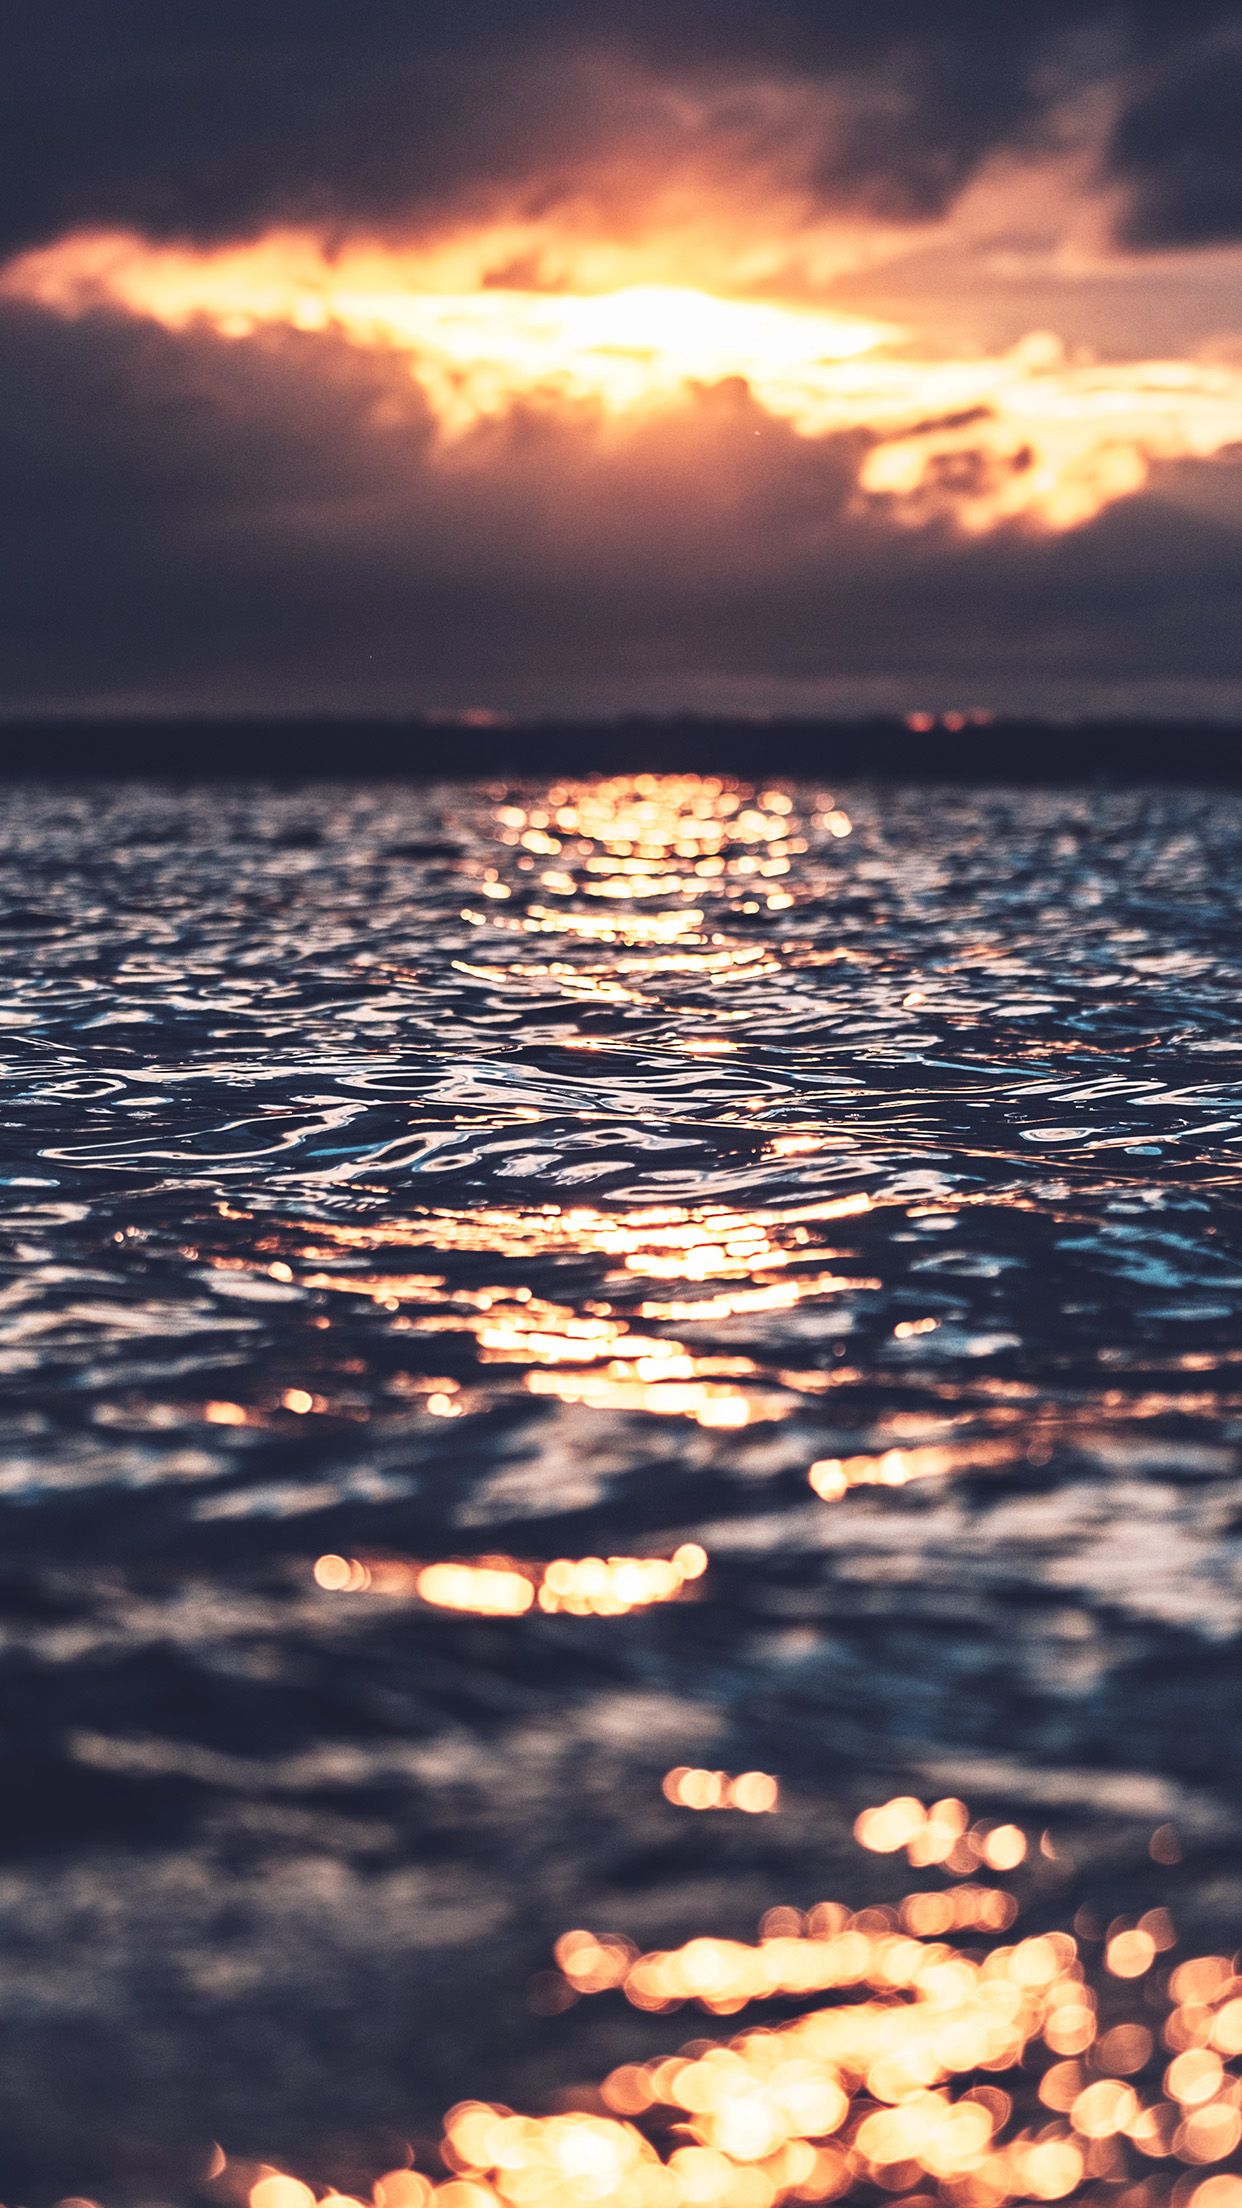  IPhone 8 Plus Hintergrundbild 1242x2208. iPhone X wallpaper. sea wave sun nature sunset